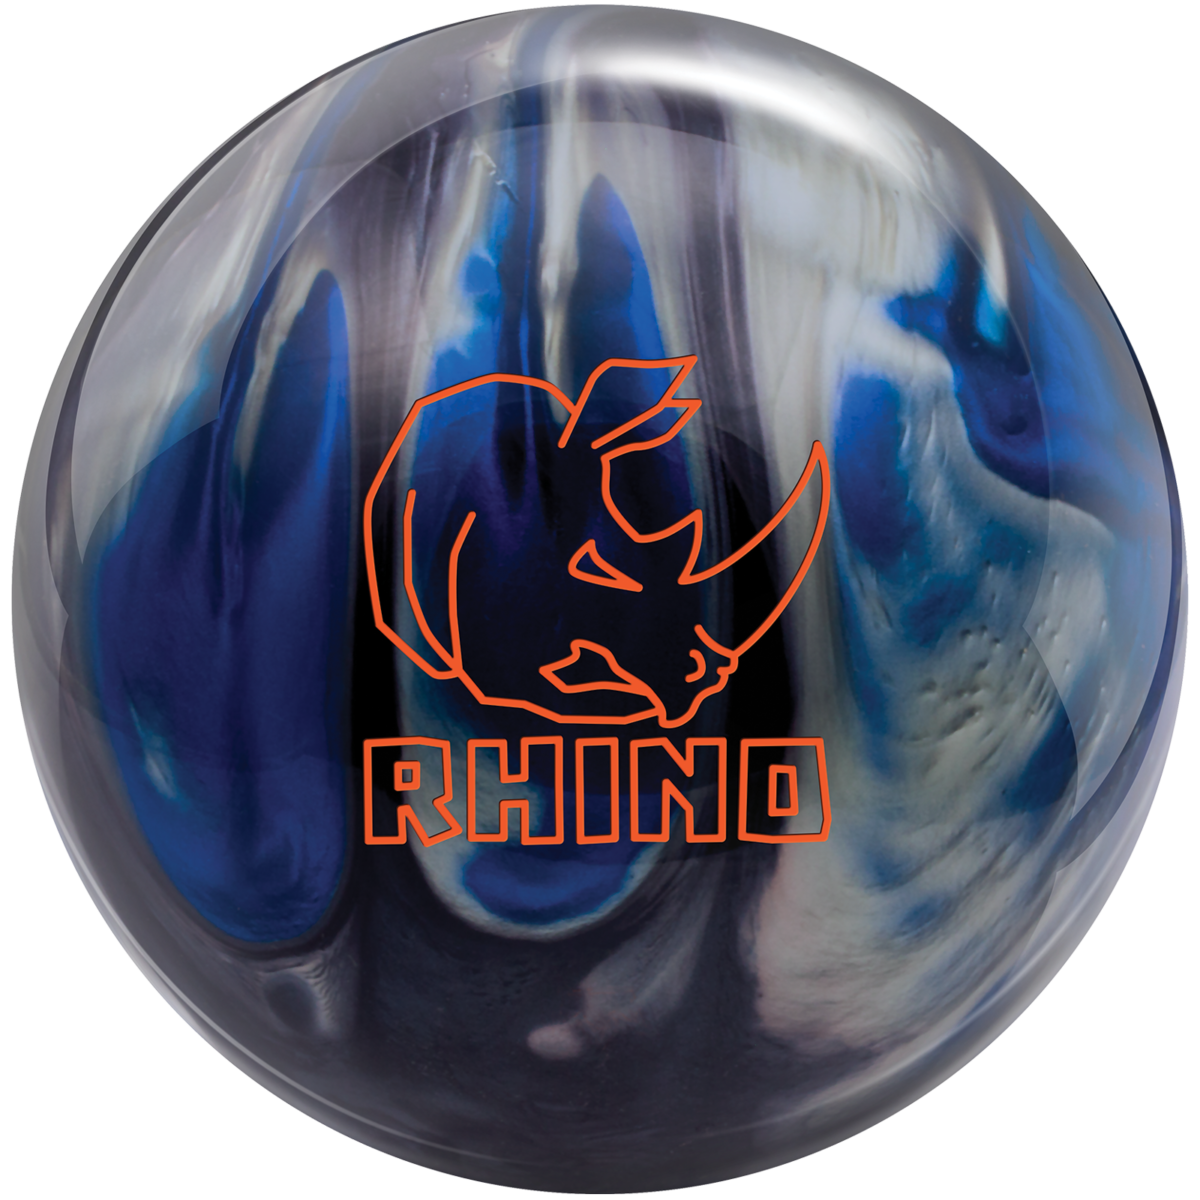 12lb Brunswick Rhino Cobalt/Aqua/Teal Pearl Reactive Bowling Ball NEW 